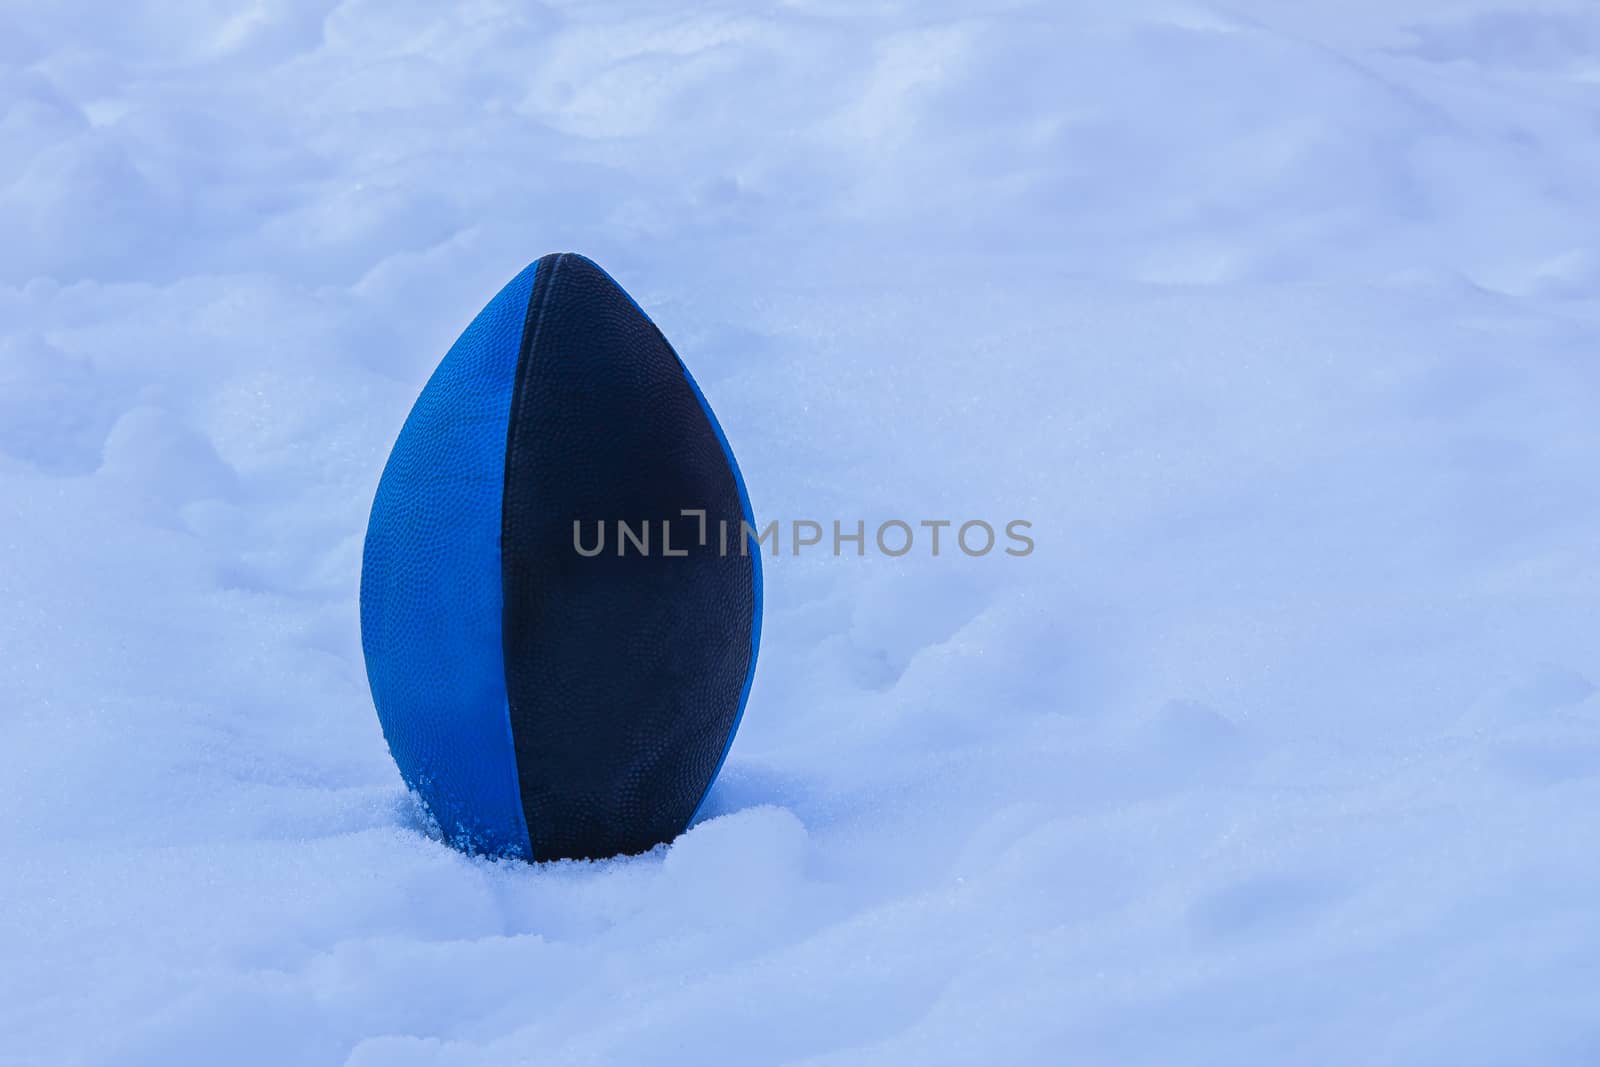 Blue Black Junior football on Snow